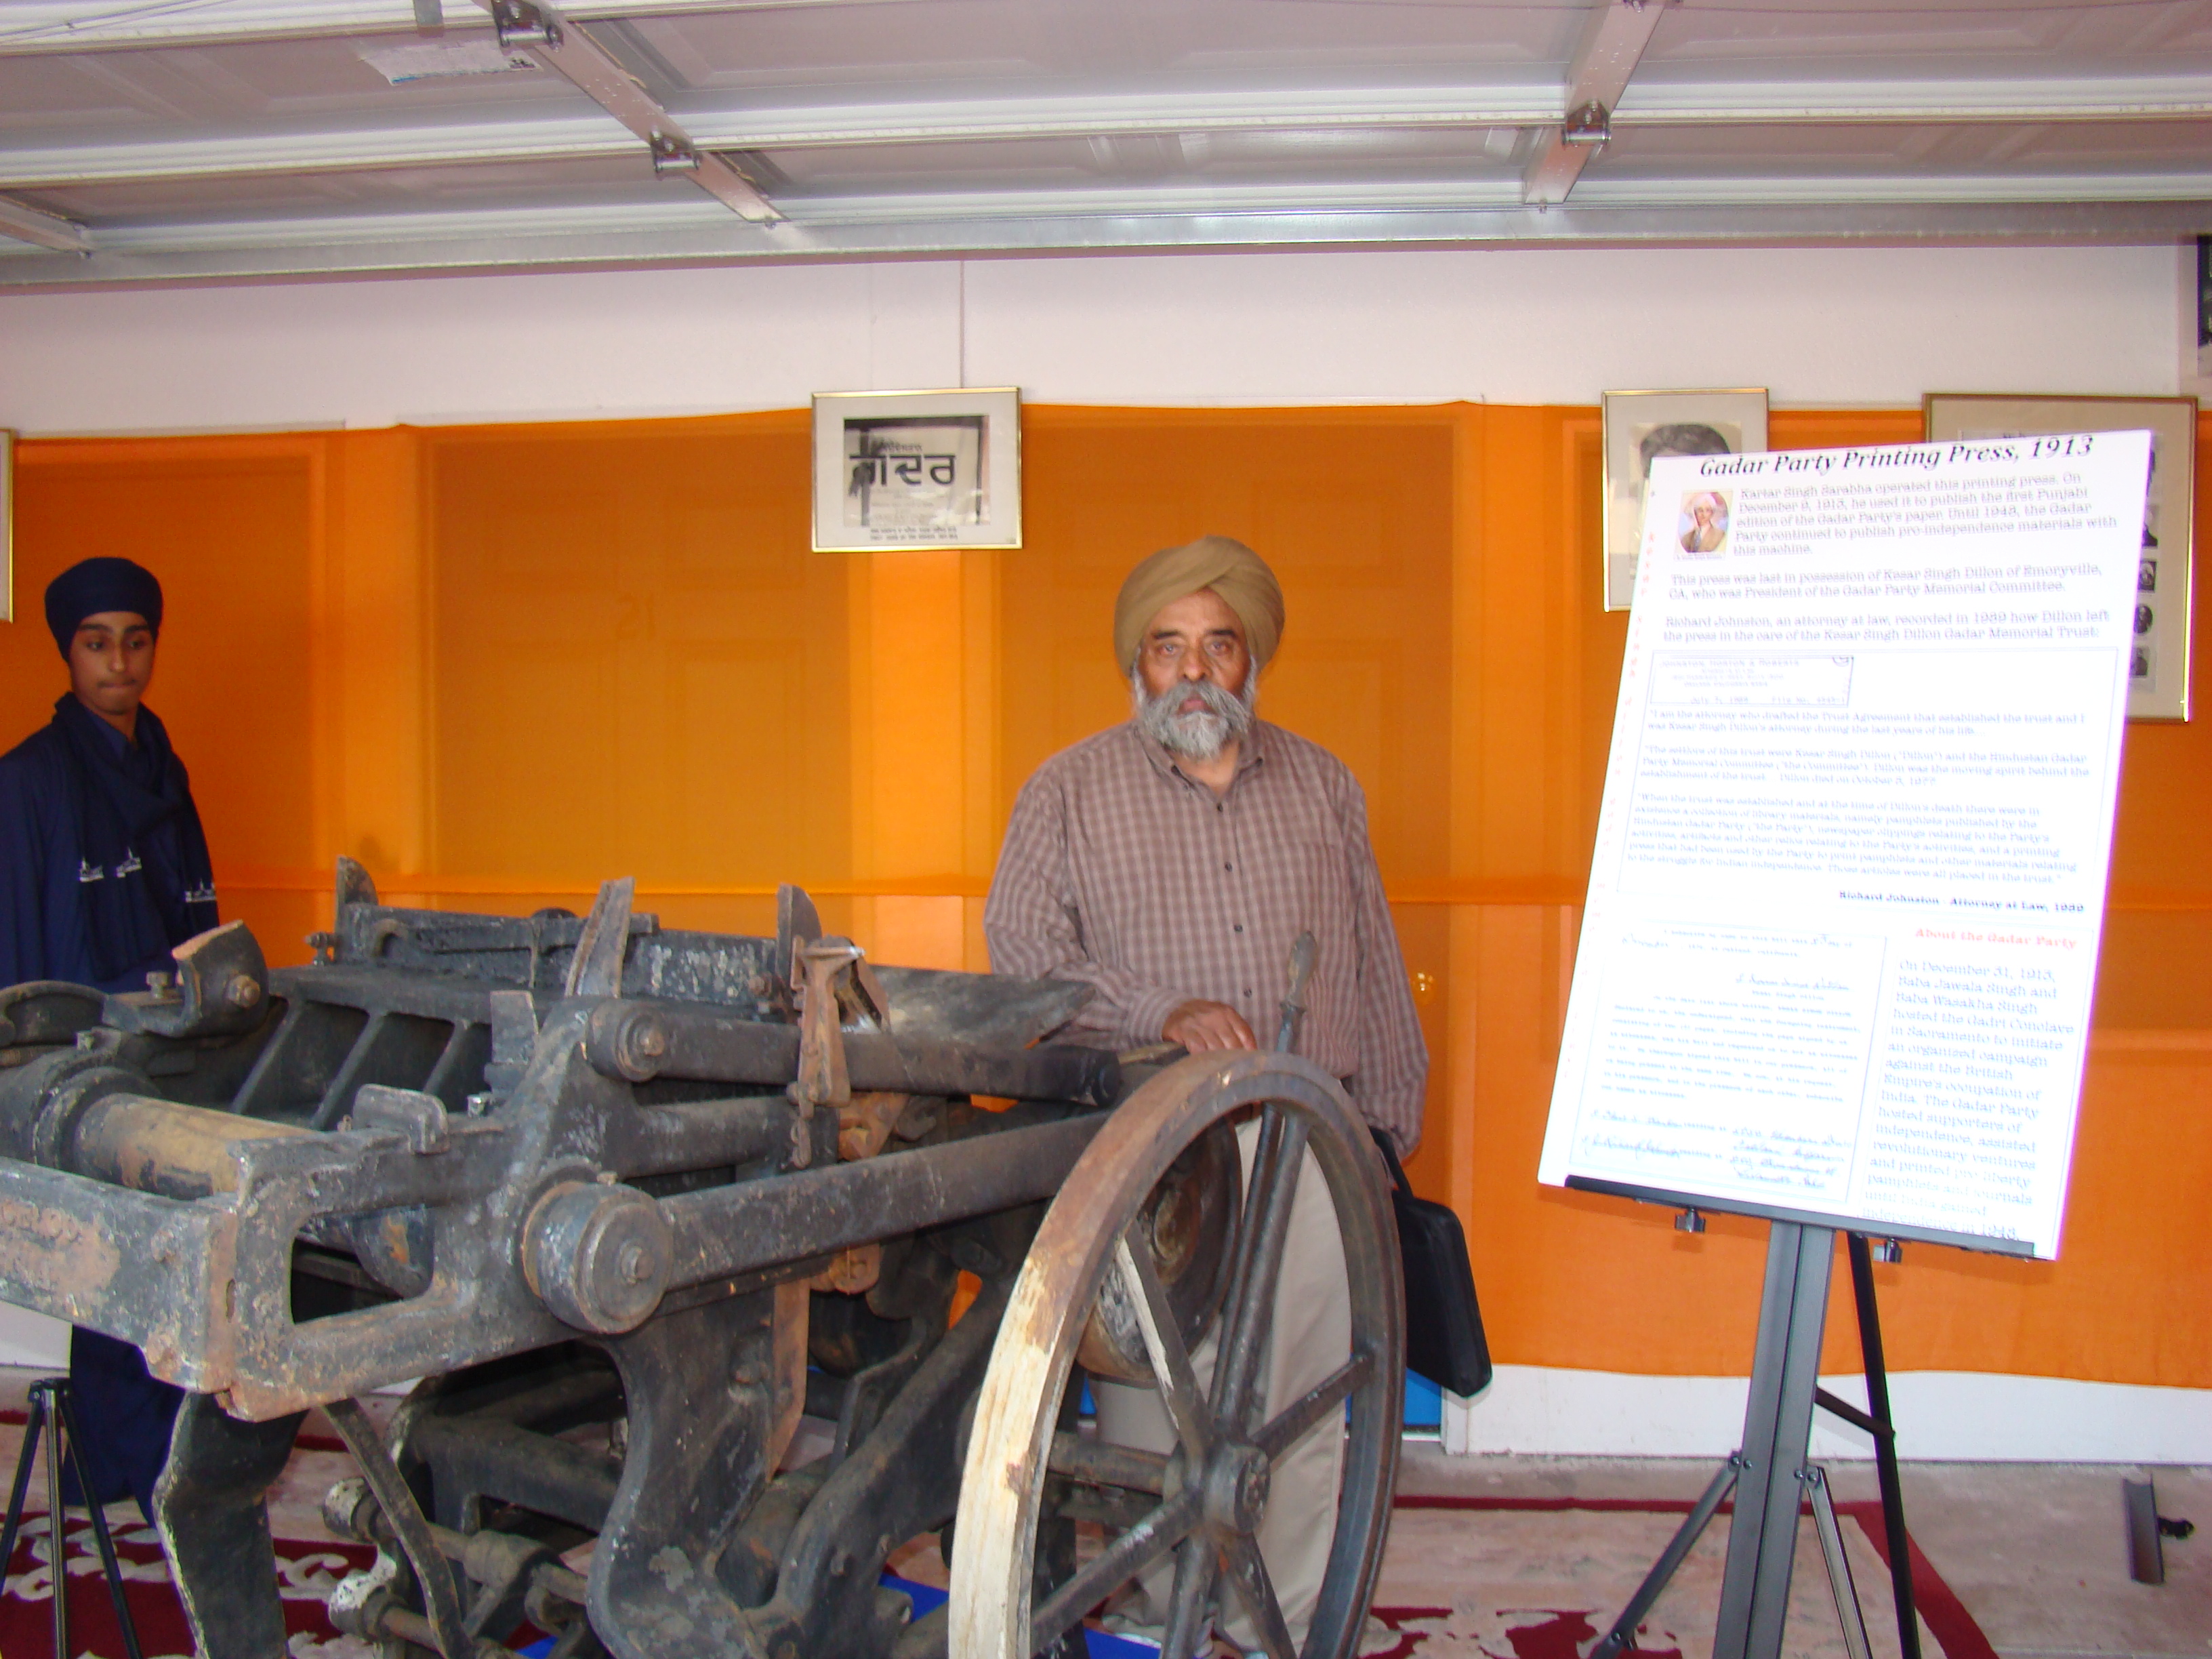 Punjabi Pioneers operated this Printing Press in San Francisco in 1913.